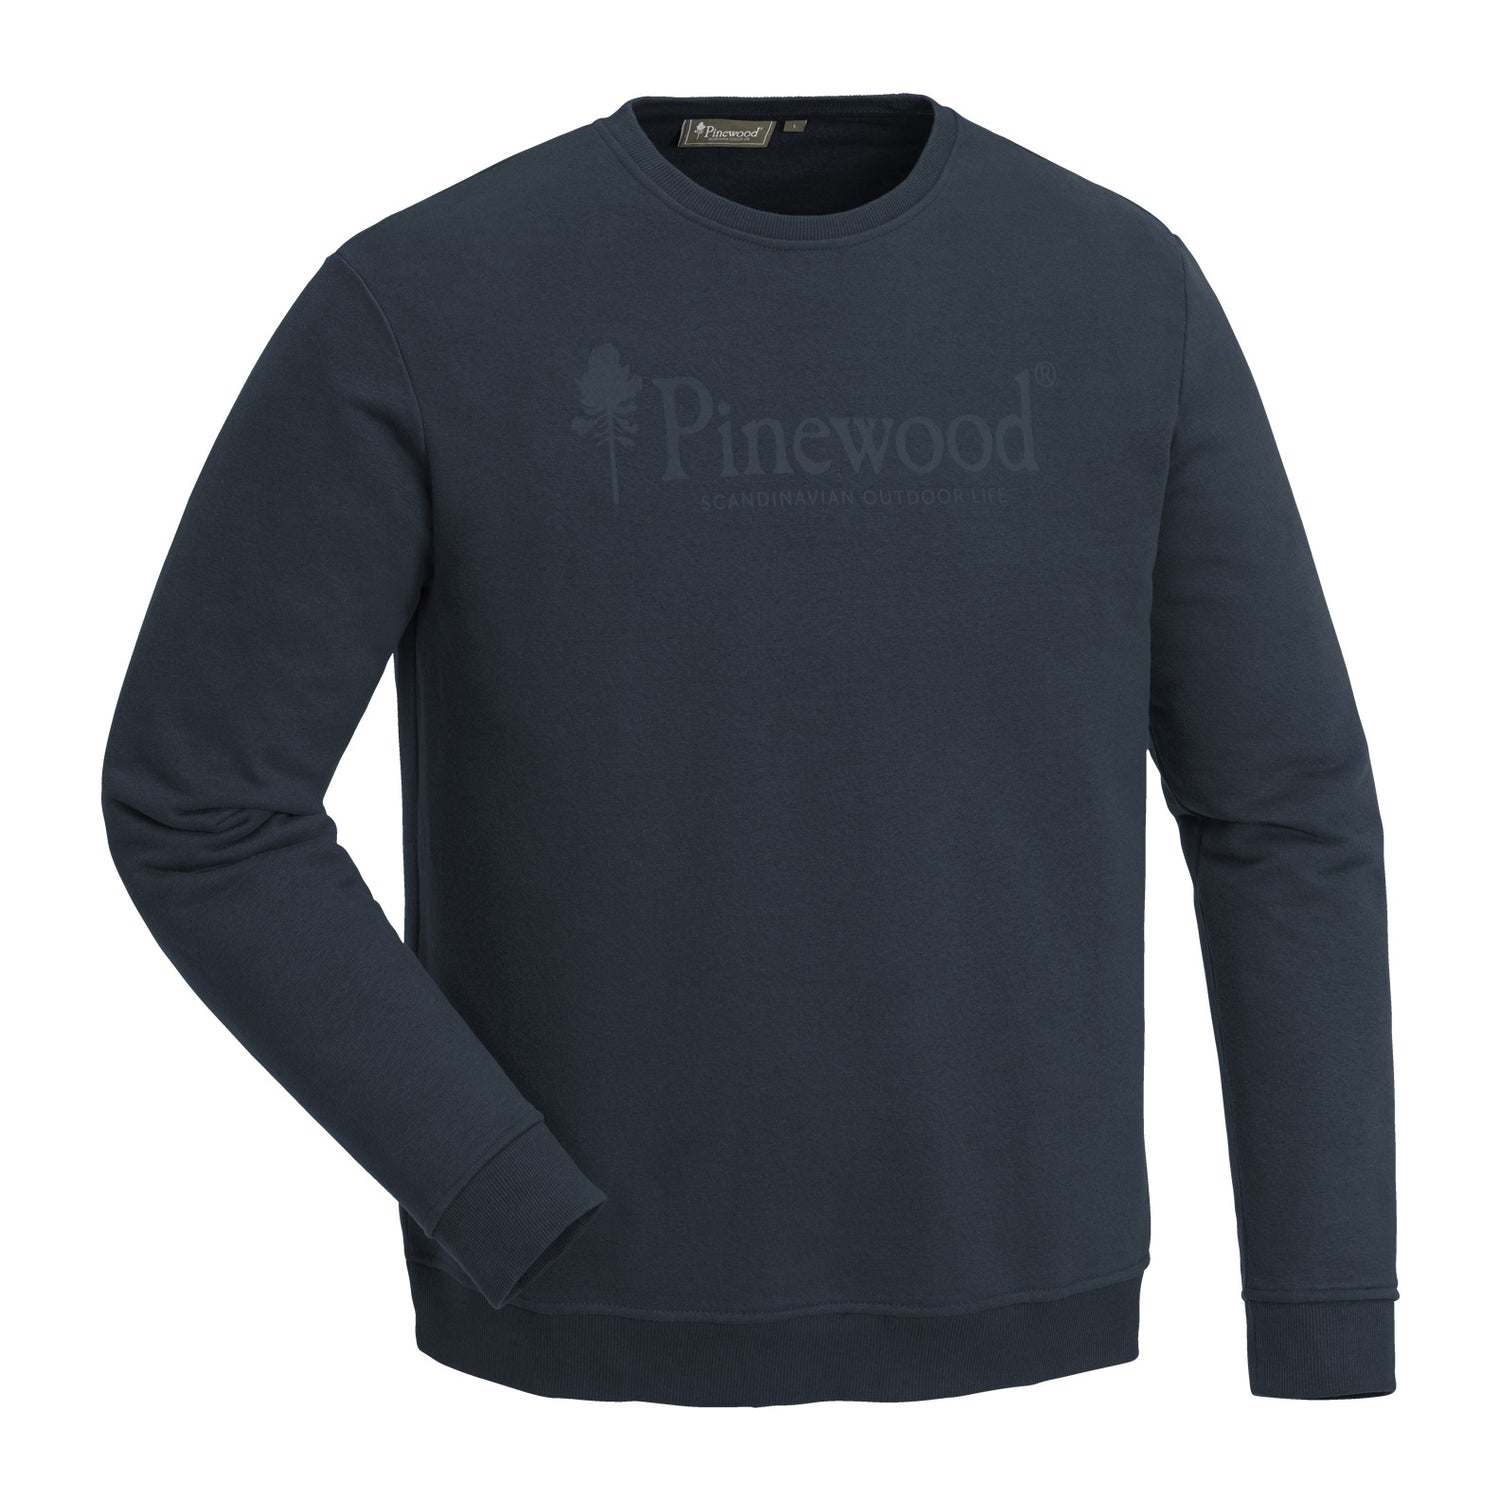 Pinewood-Sunnaryd-Sweater